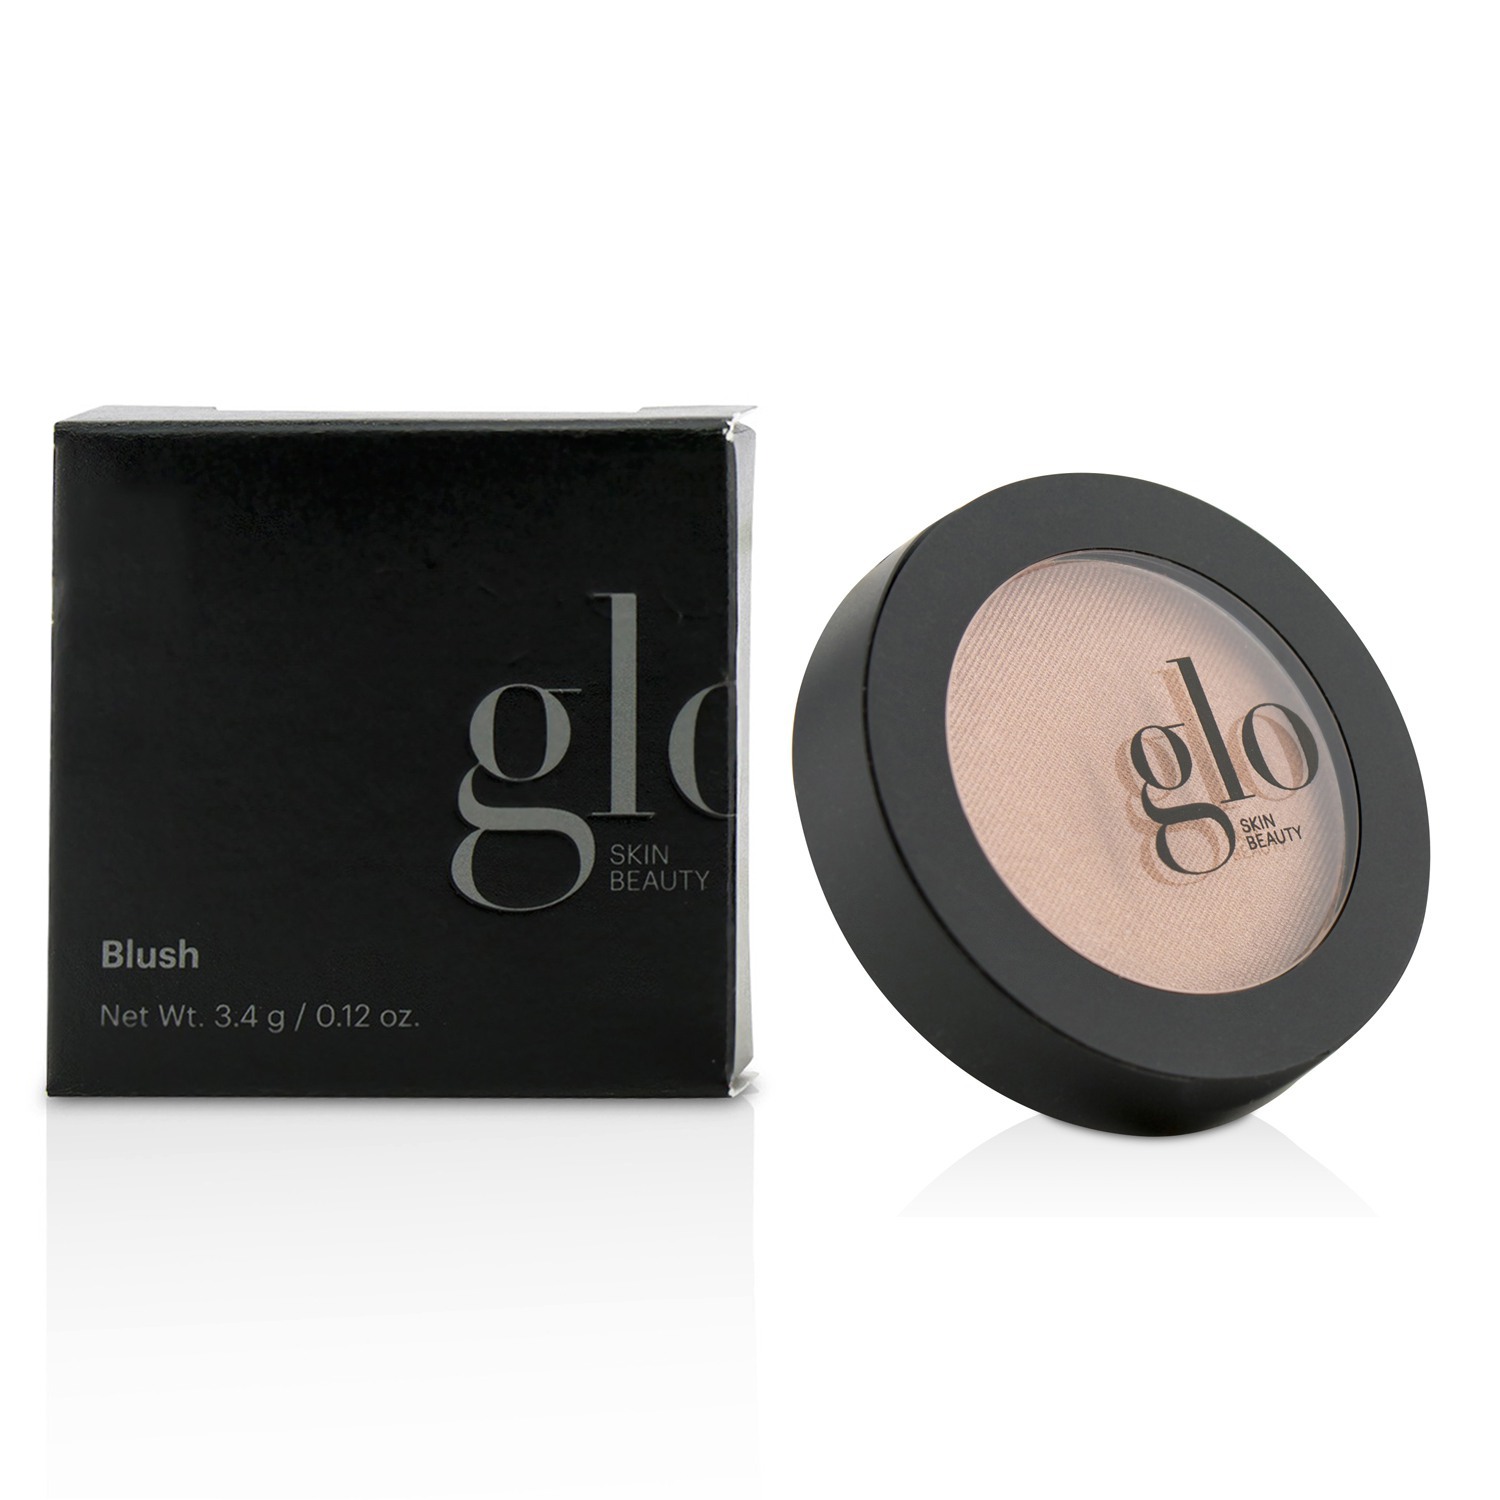 Blush - # Soleil Glo Skin Beauty Image